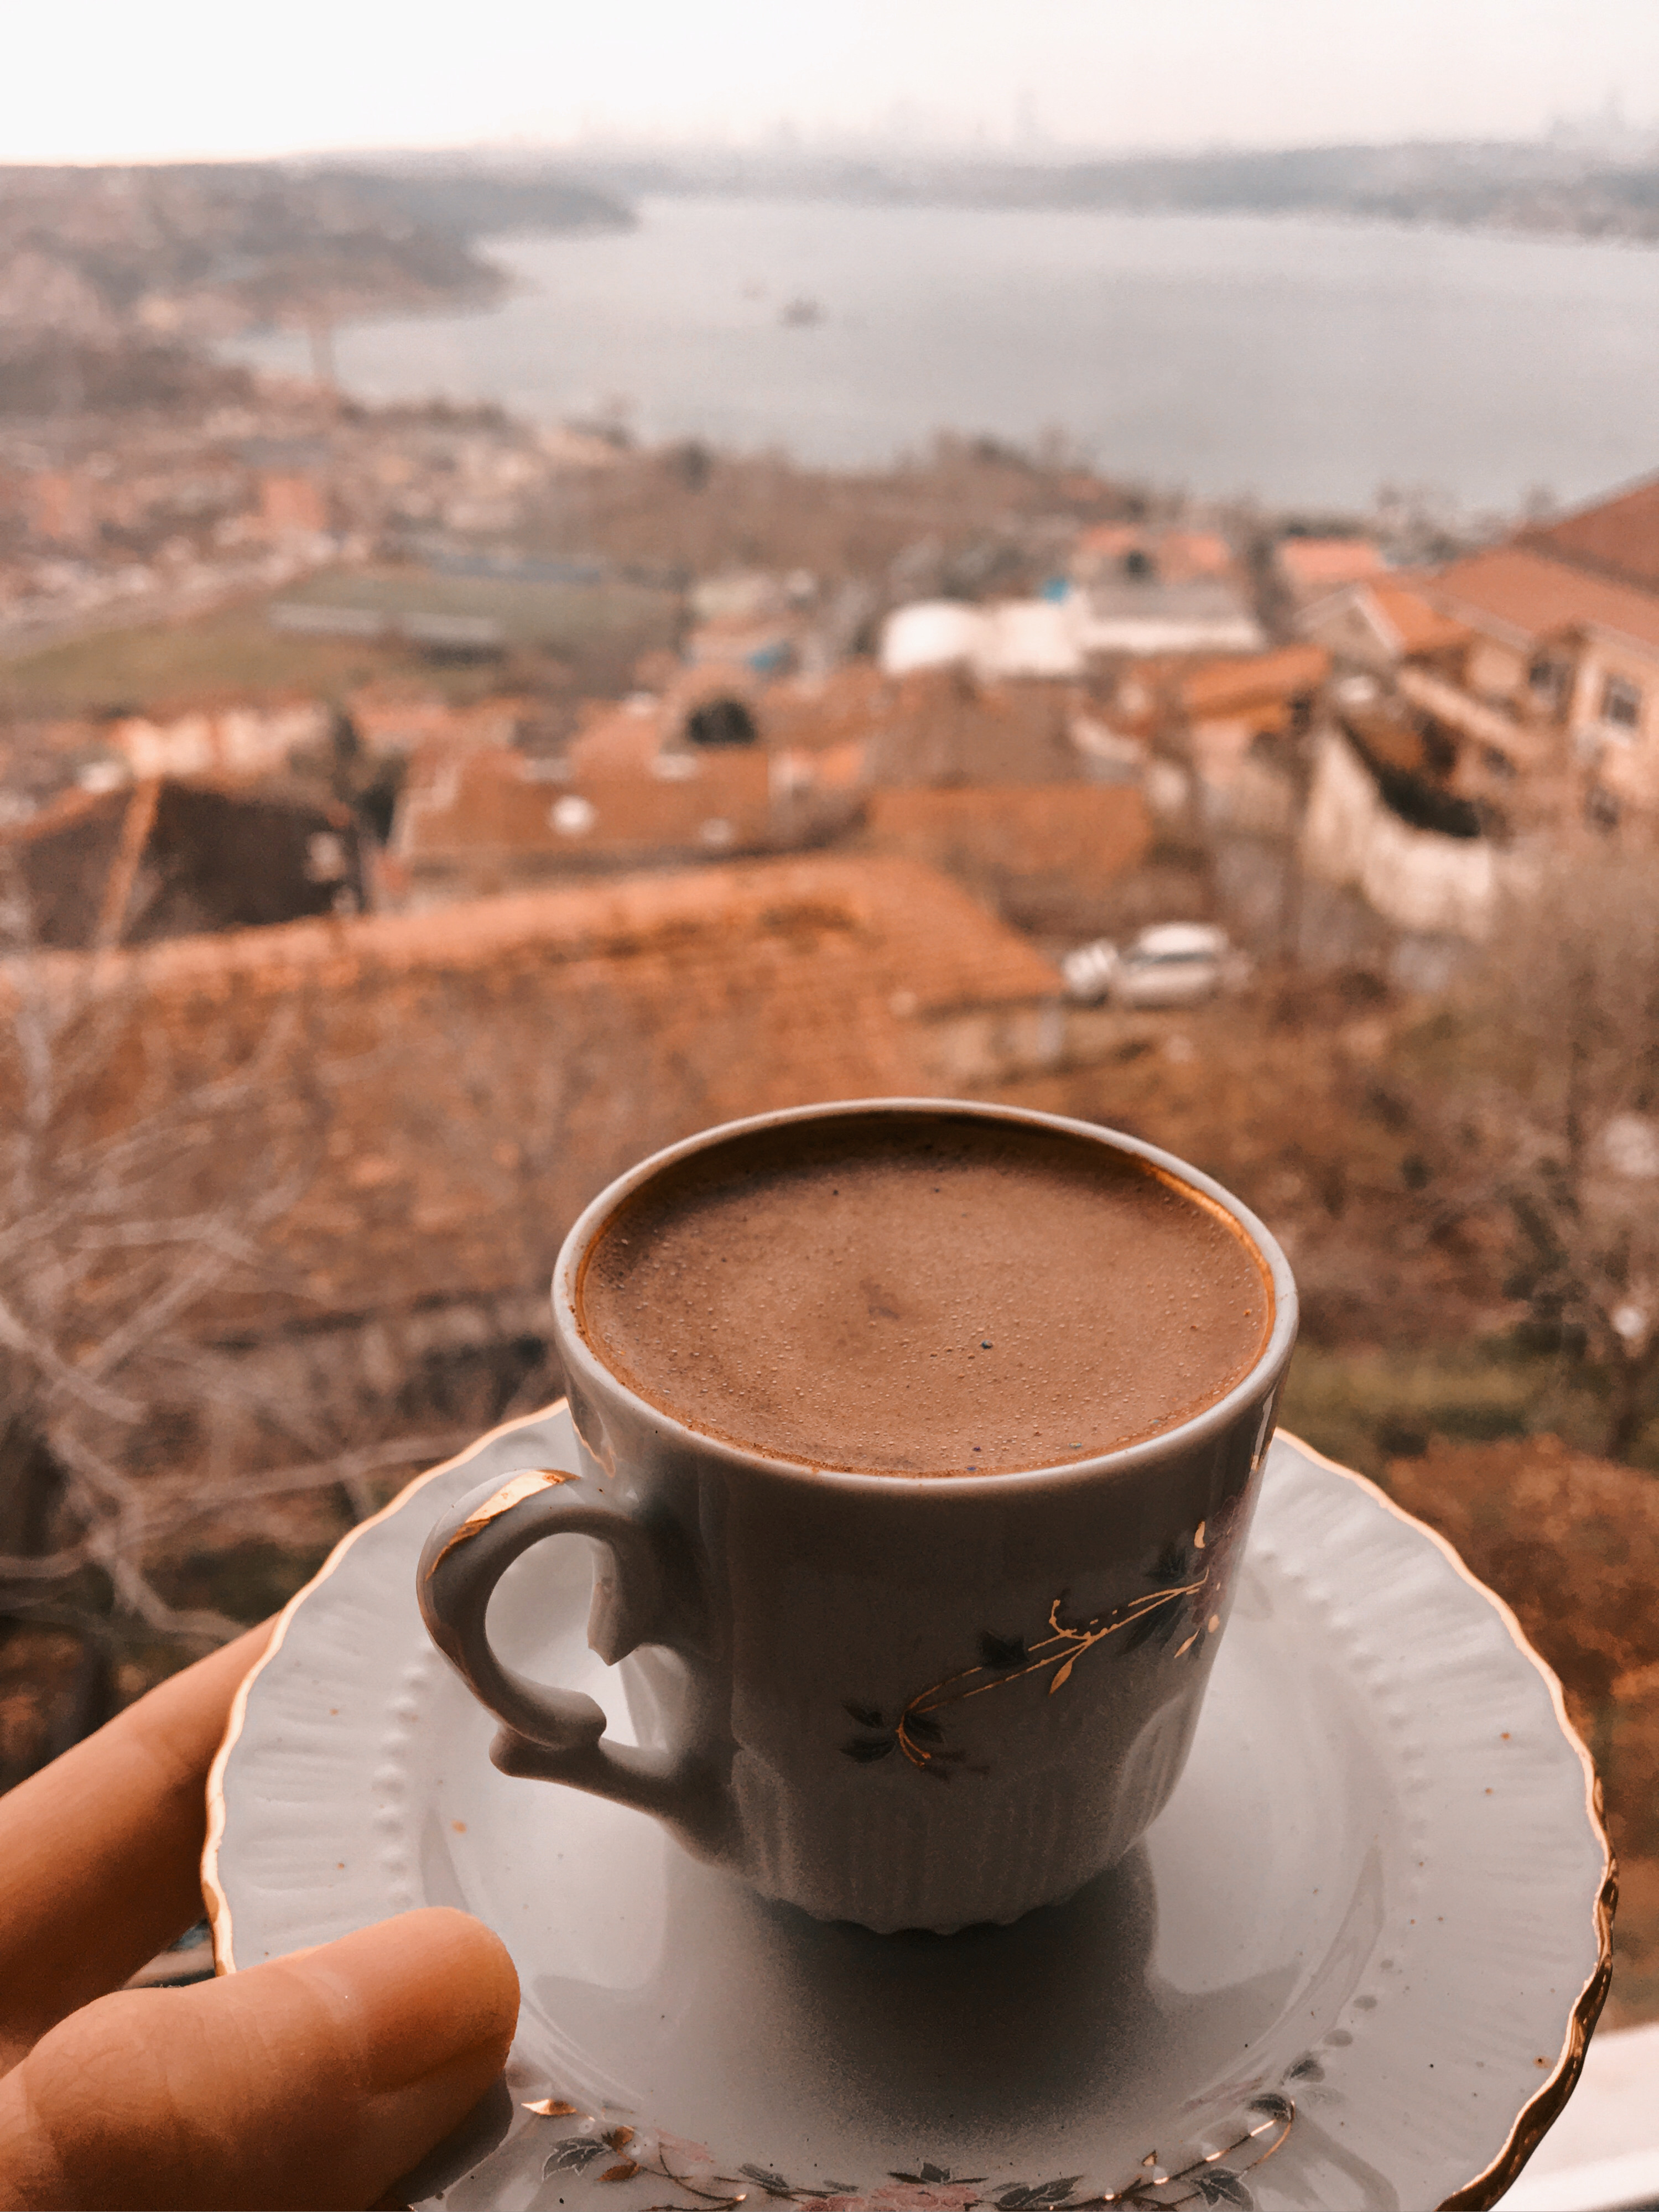 Coffee time ☕️#coffeetime #travel #istanbul #coffee #fotografia #landscape #interesting #followme #picsart #picoftheday #turkey @picsart @freetoedit 